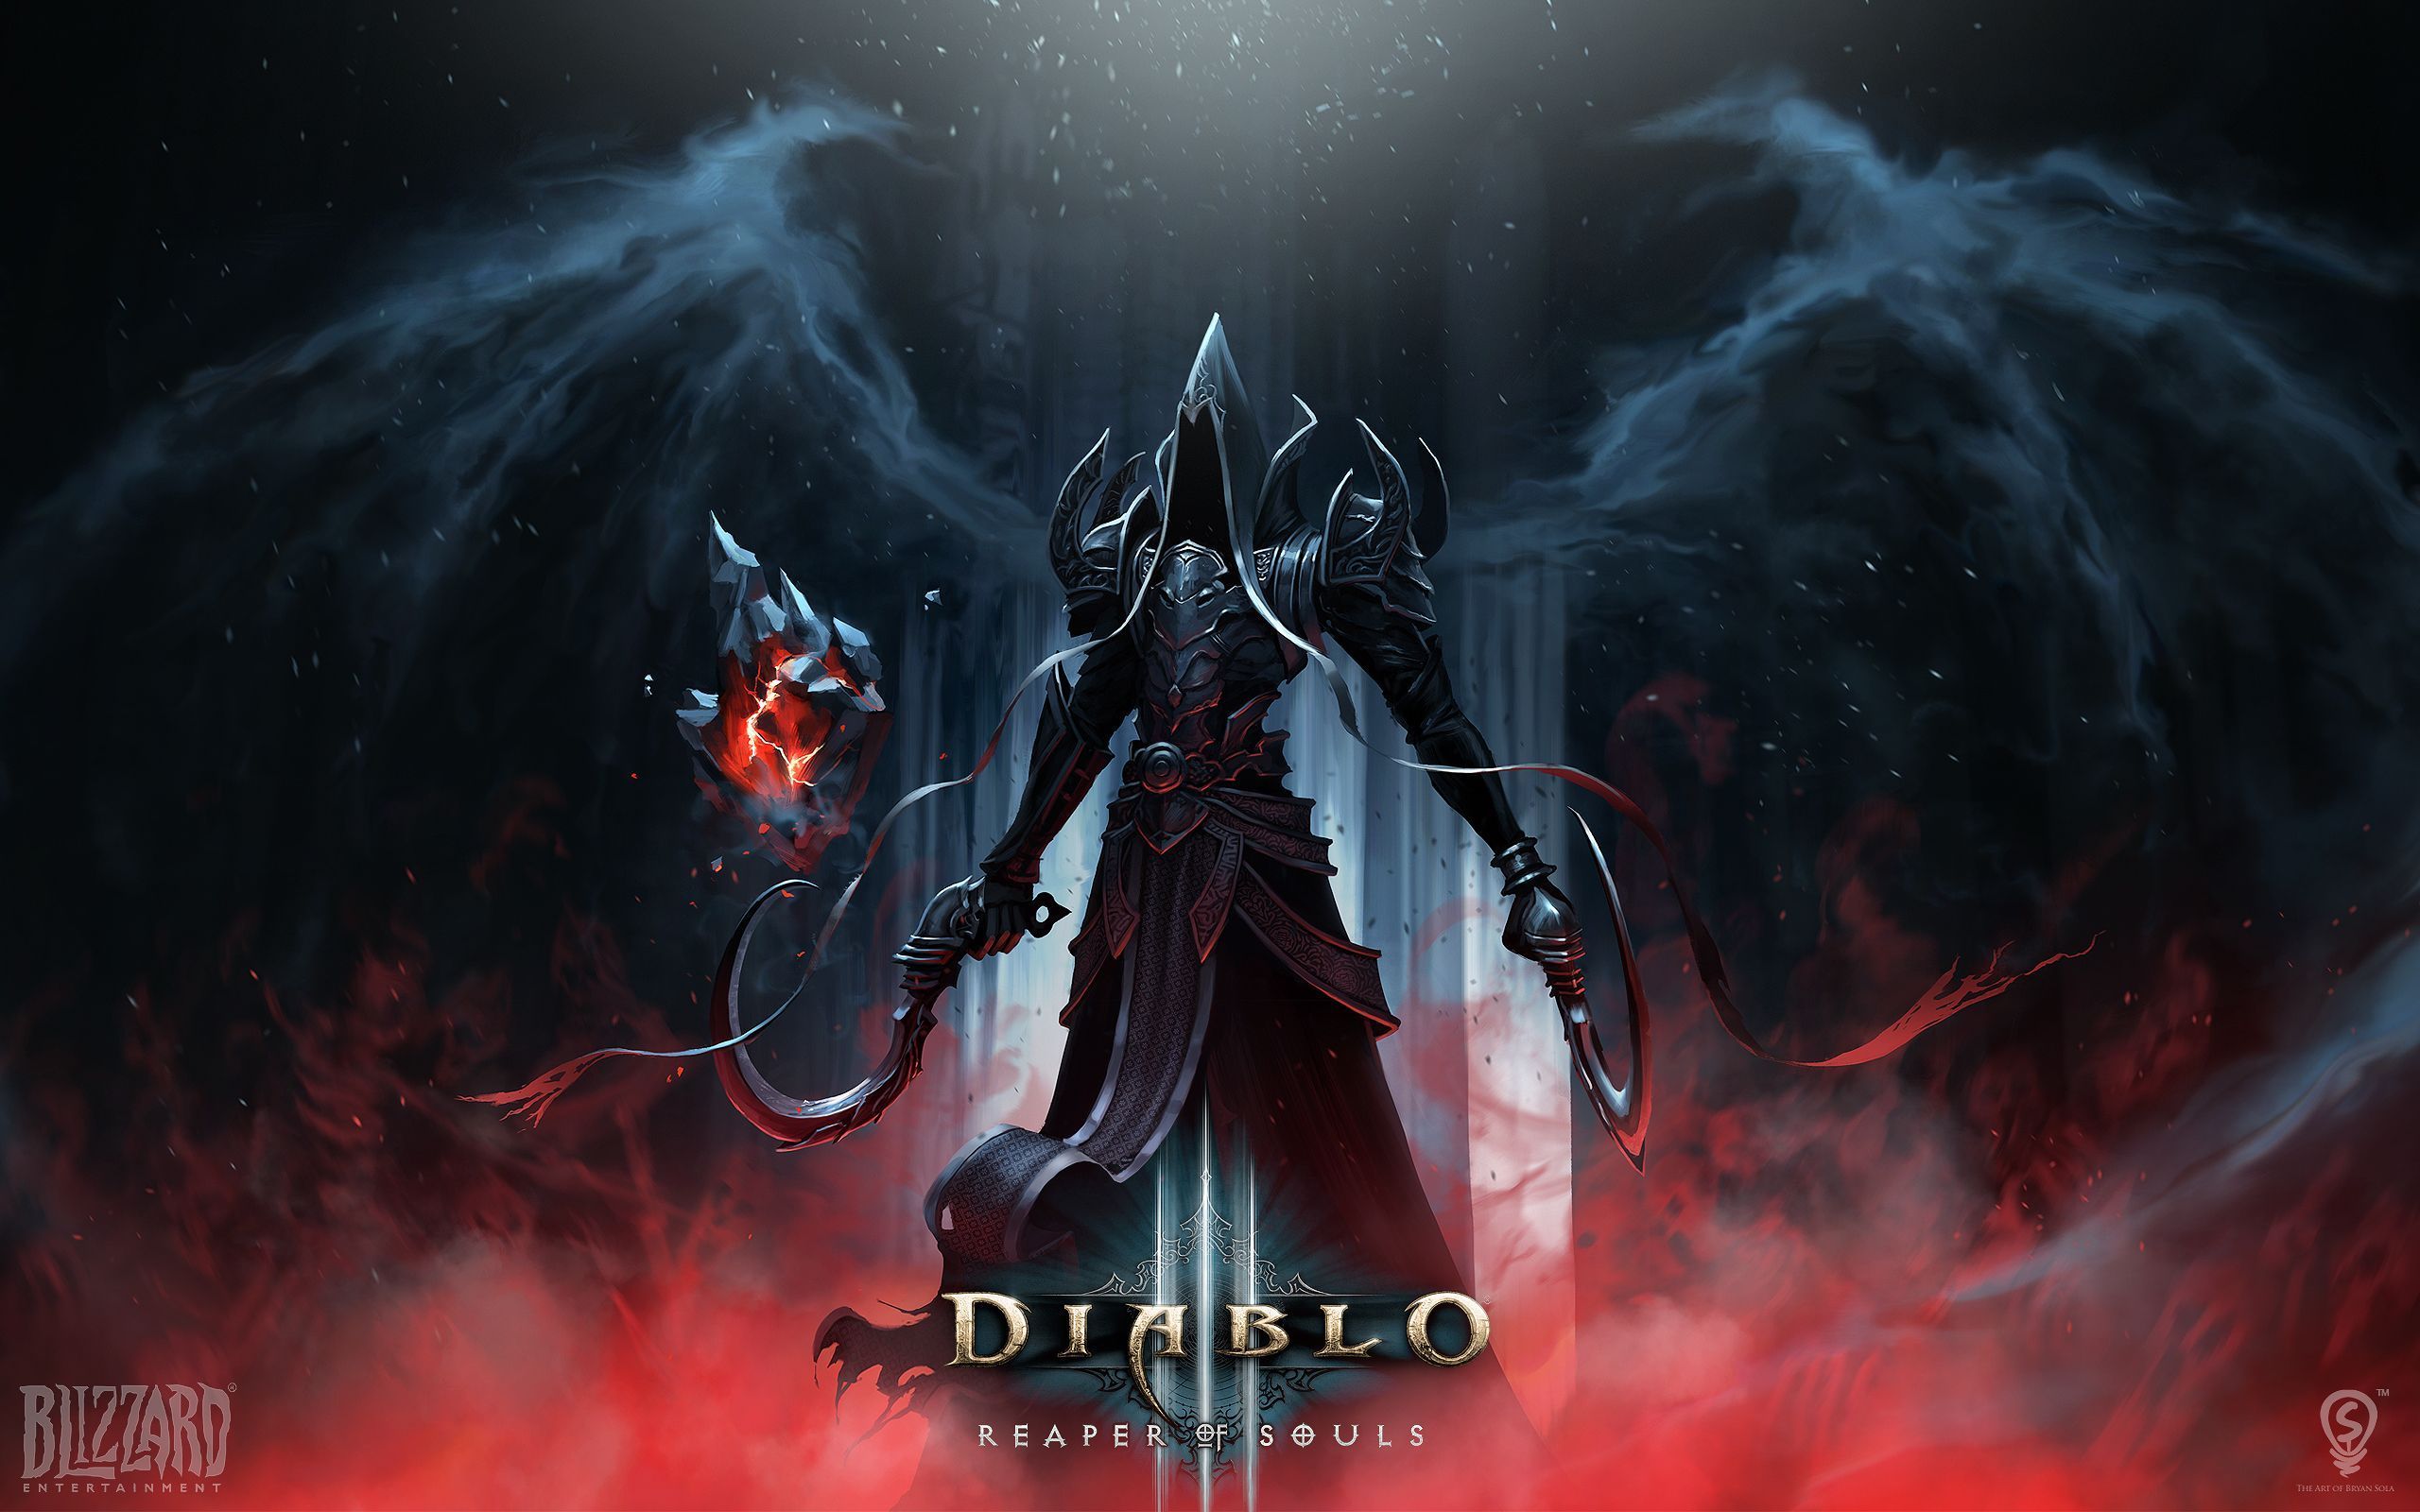 Diablo 3 Reaper of Souls Wallpapers | HD Wallpapers